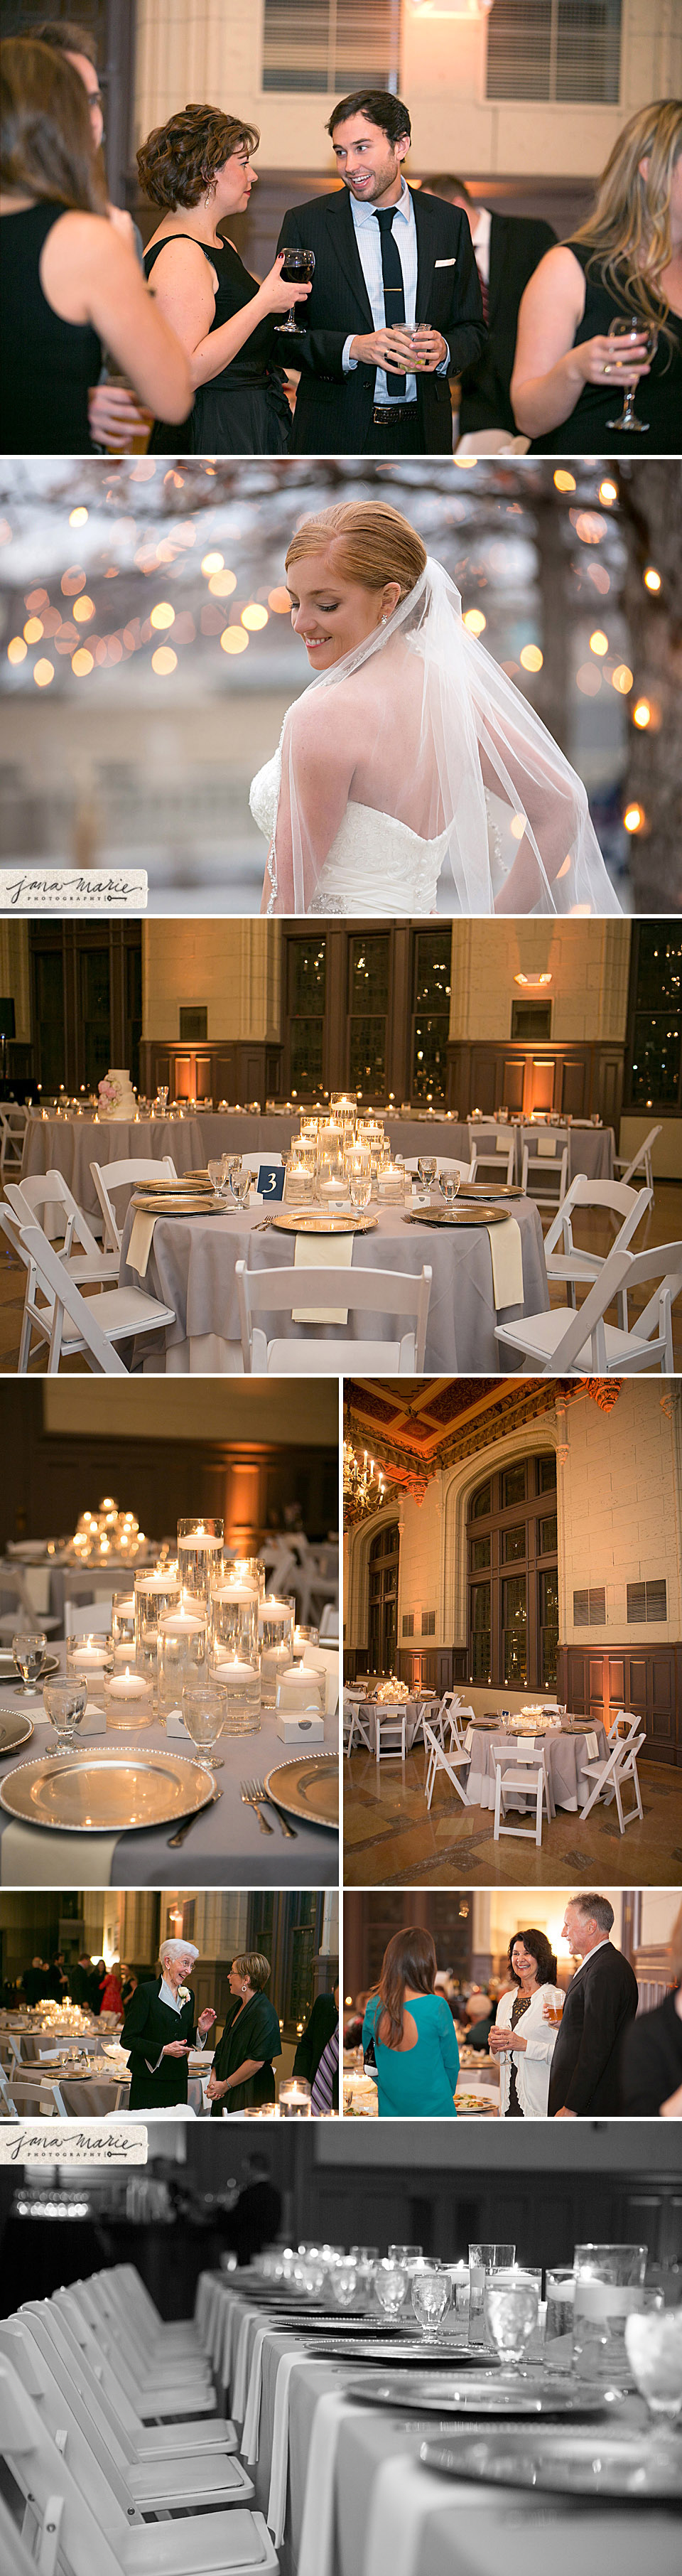 Abby & Eric, Kansas City wedding venues, Jana Marie Photography, reception decor, details